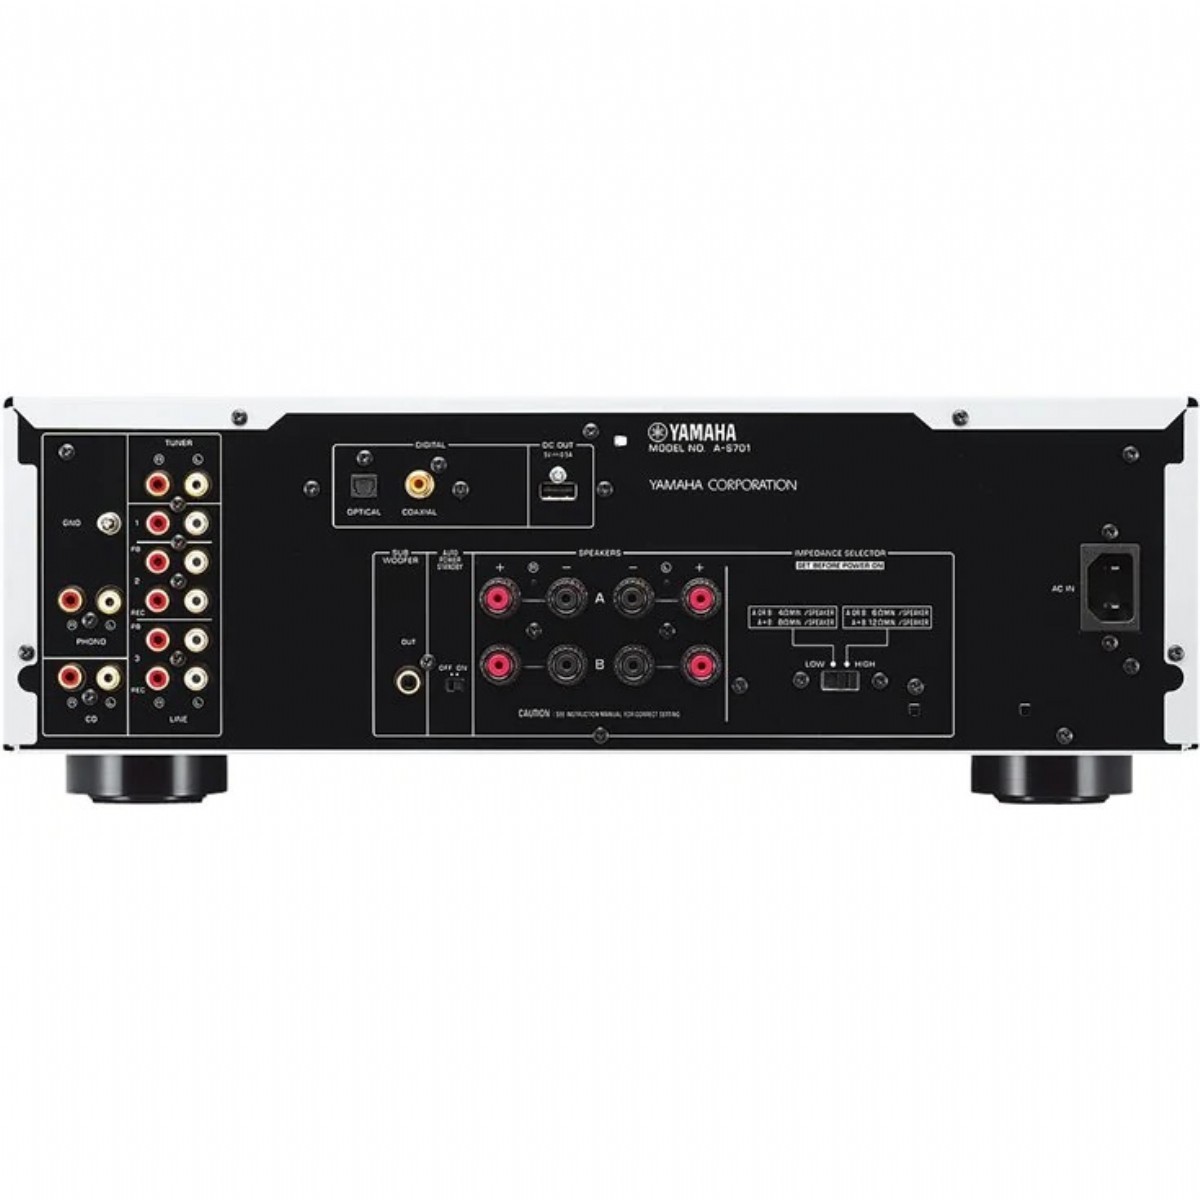 Entegre Ampliler | Yamaha AS 701 Enterge Amfi | AS 701 | yamaha as701 entegre amfi,yamaha as701,akusta hifi | 